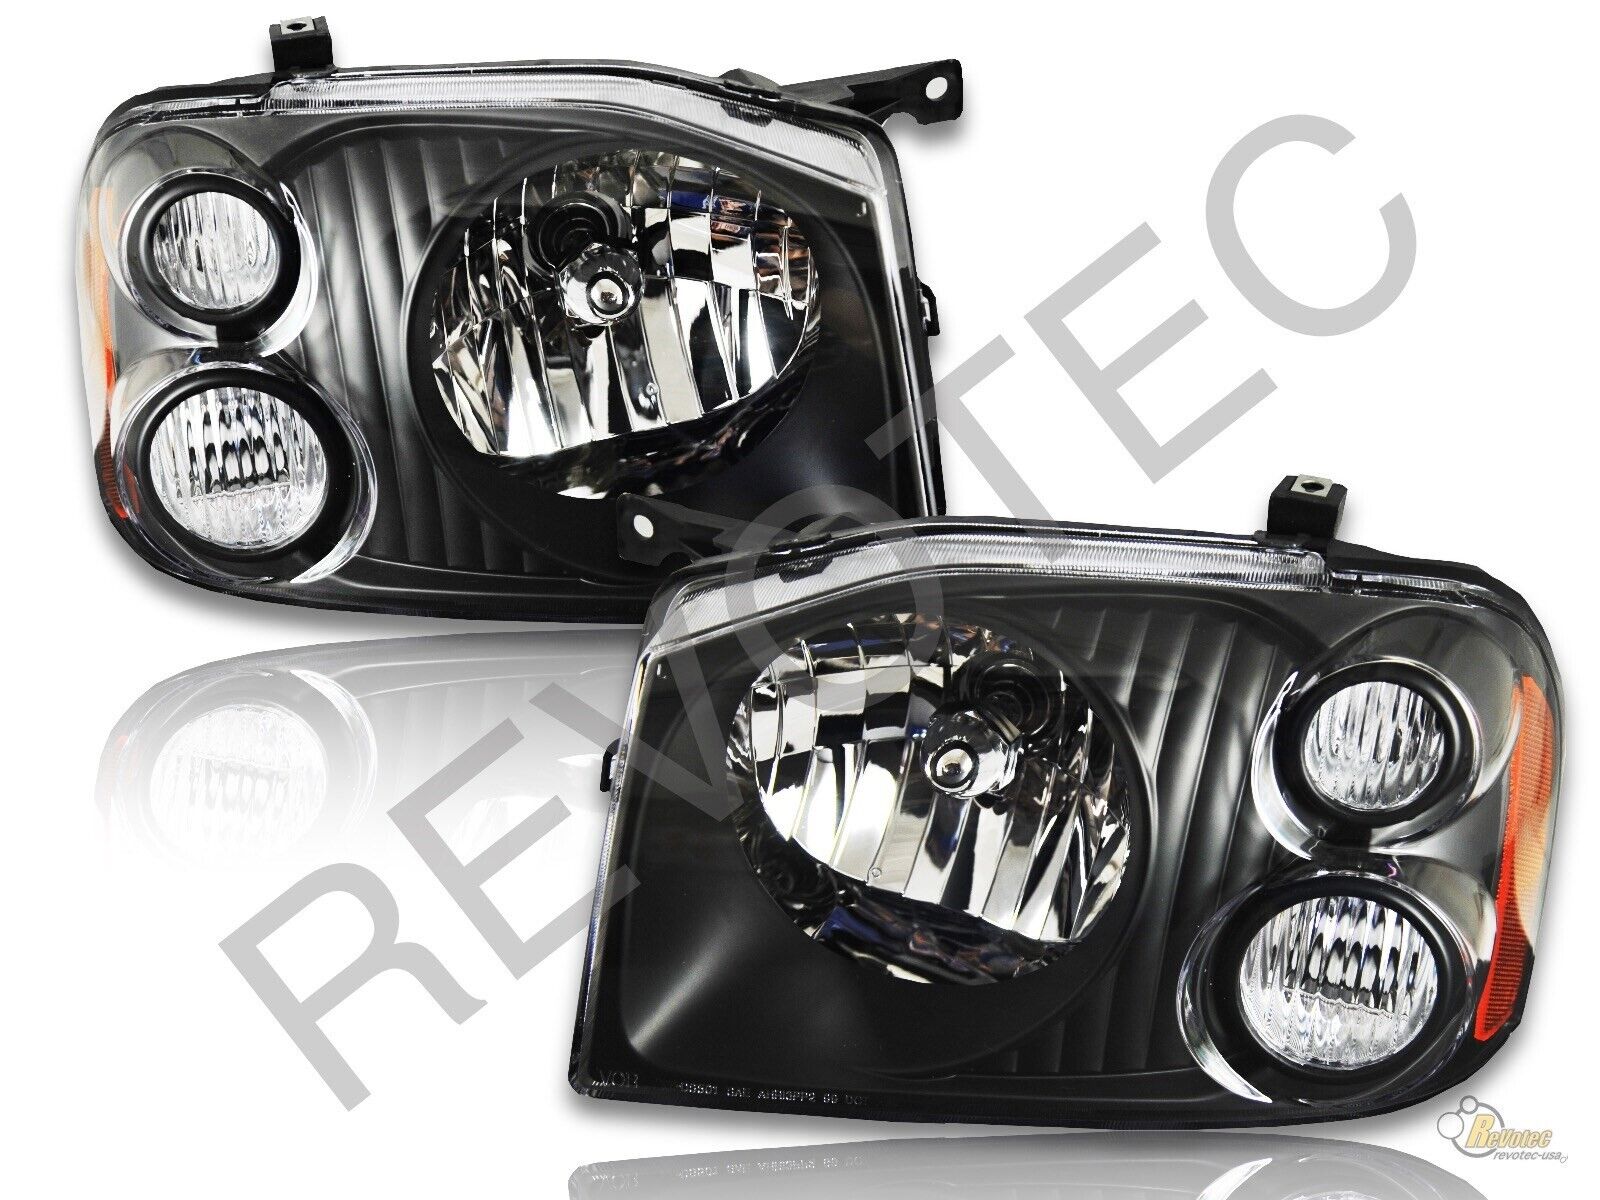 Black Headlights Headlamps Pair Set LH & RH For 2001-2004 Nissan Frontier Pickup